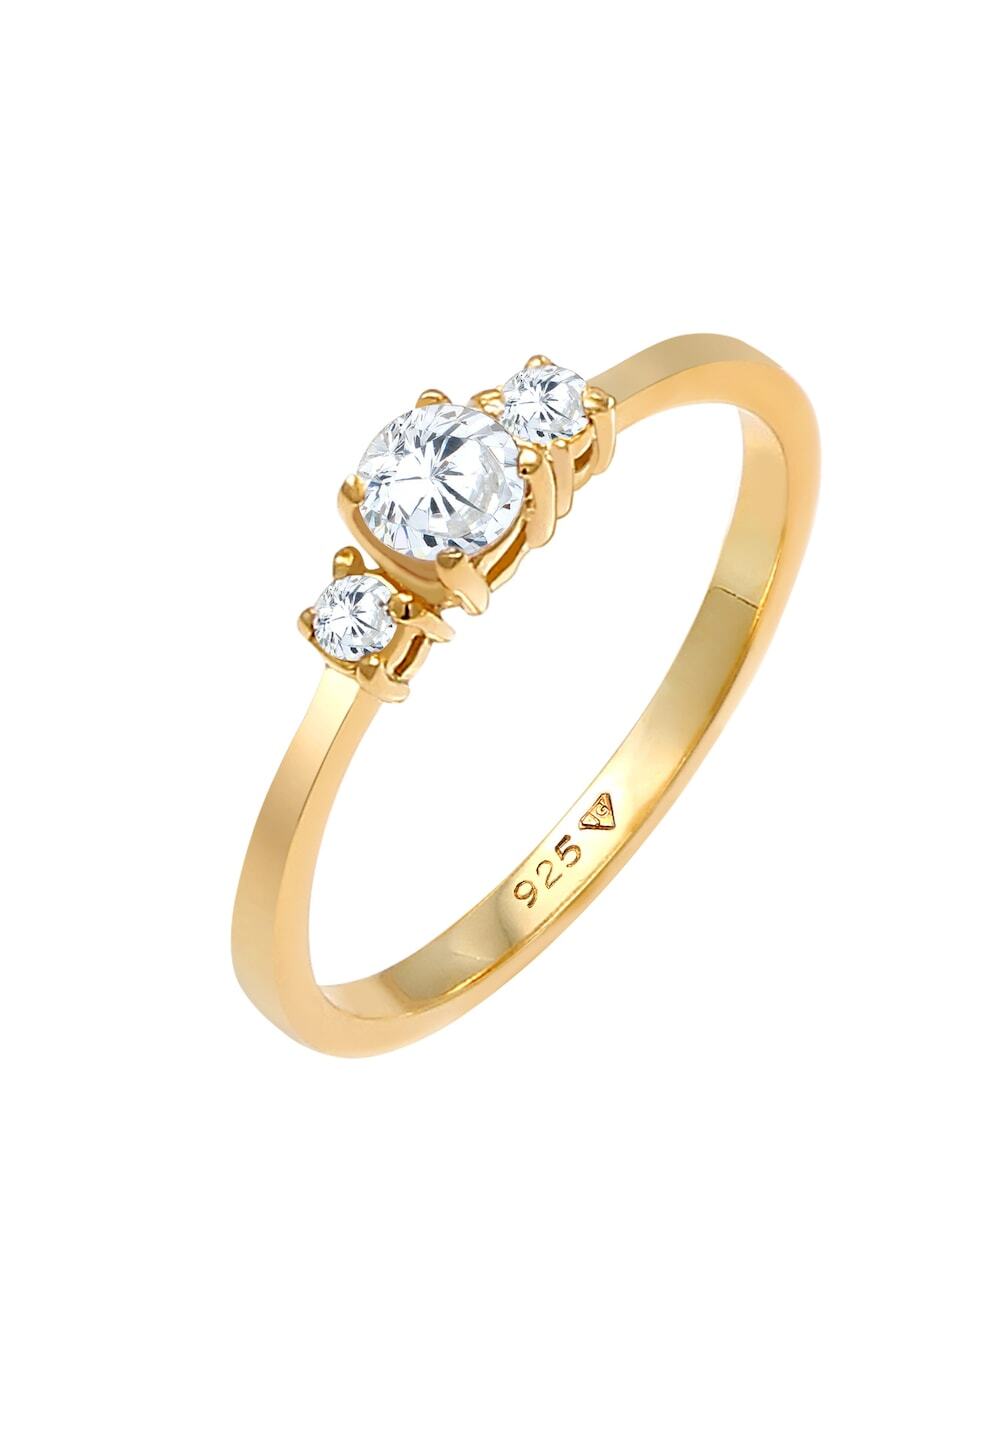 Elli Elli Elli Ring Dames Verlovingsring Sprankelend met Zirkonia Kristallen van verguld 925 Sterling Zilver Ringen